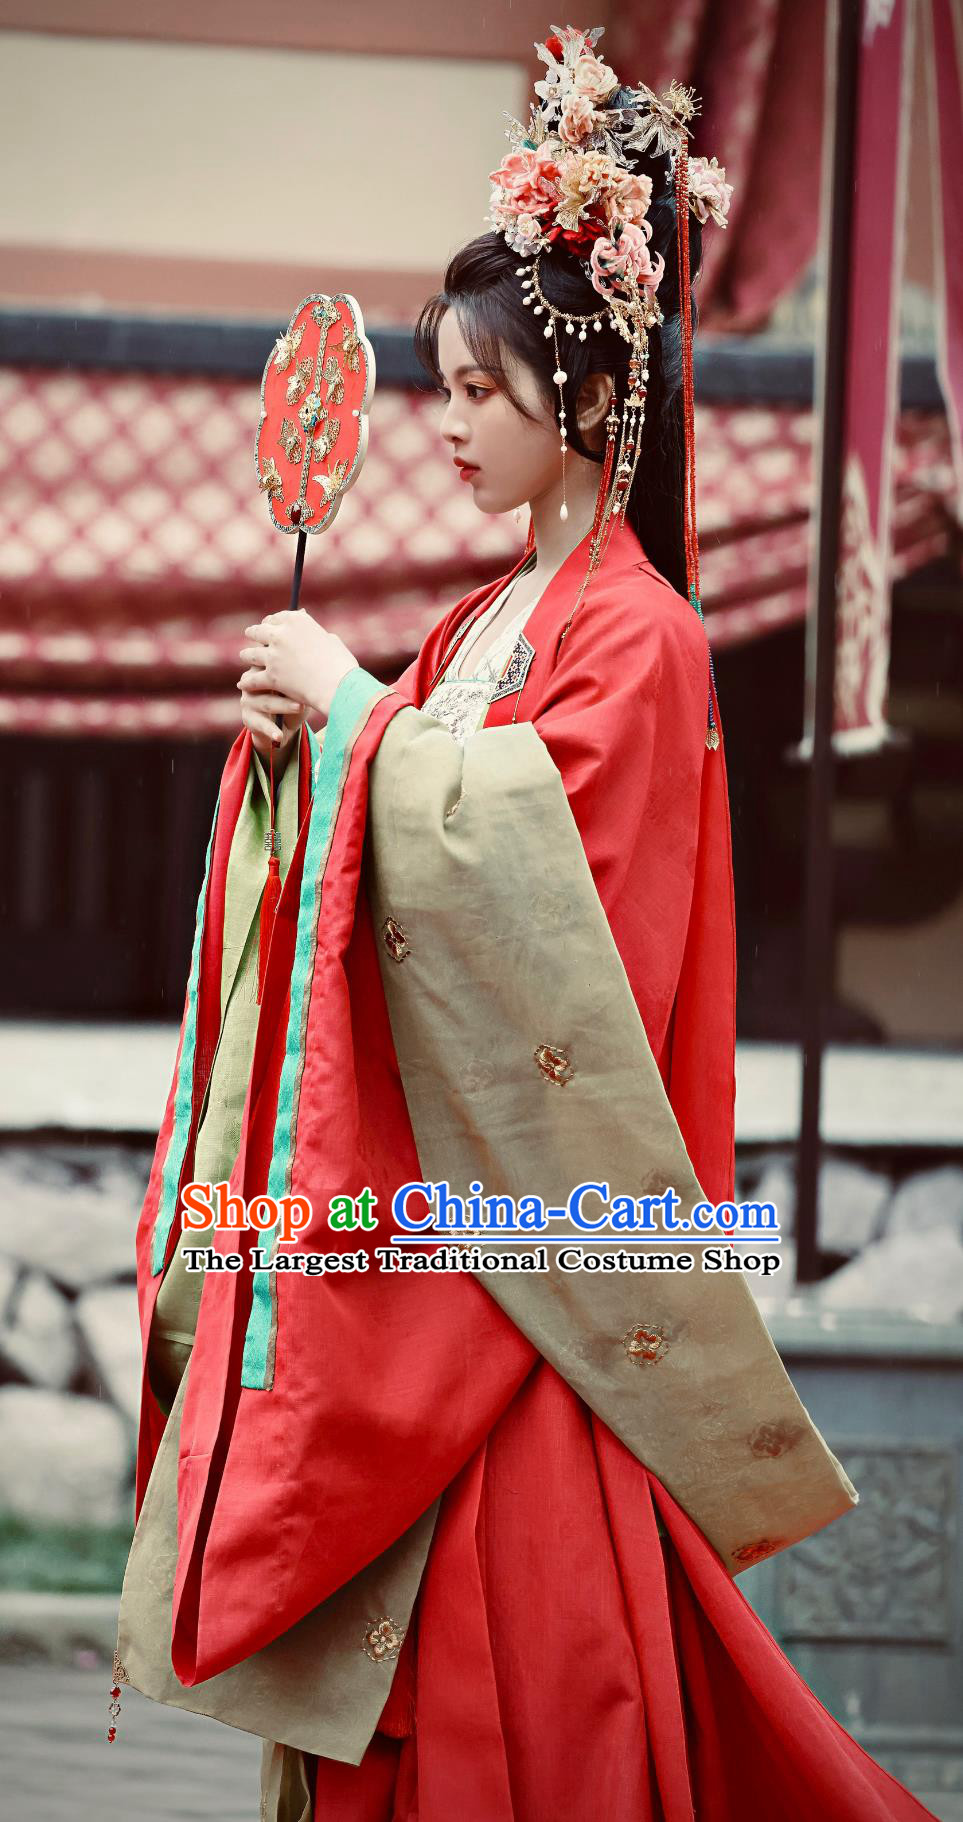 China Ancient Fairy Clothing Costume Drama Love You Seven Times Xiang Yun Wedding Dress